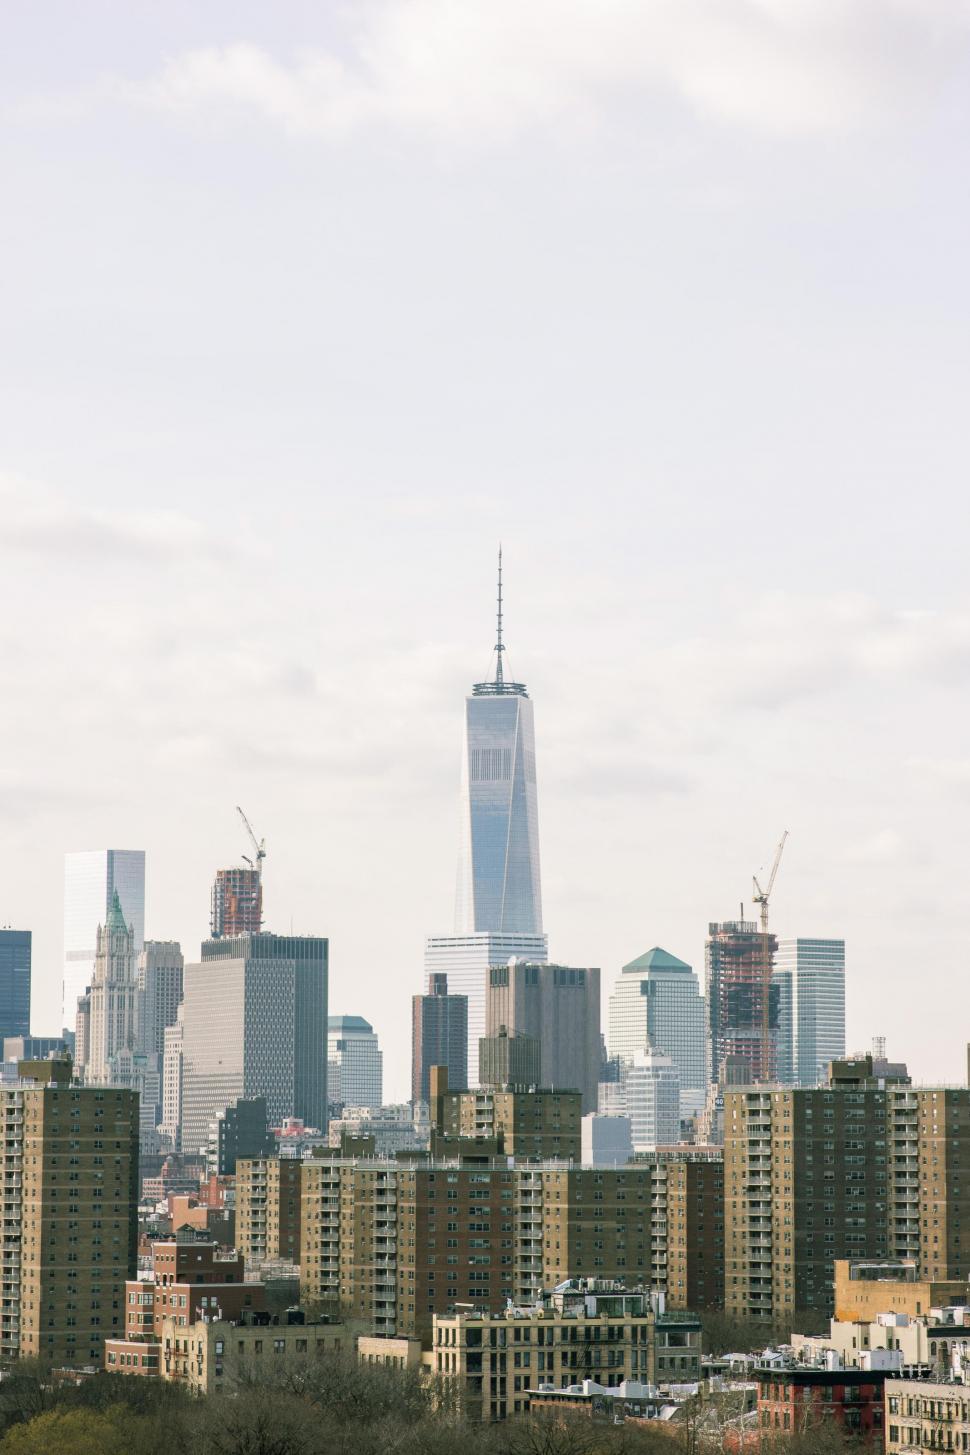 Free Image of One World Trade Center, Lower Manhattan, New York City 